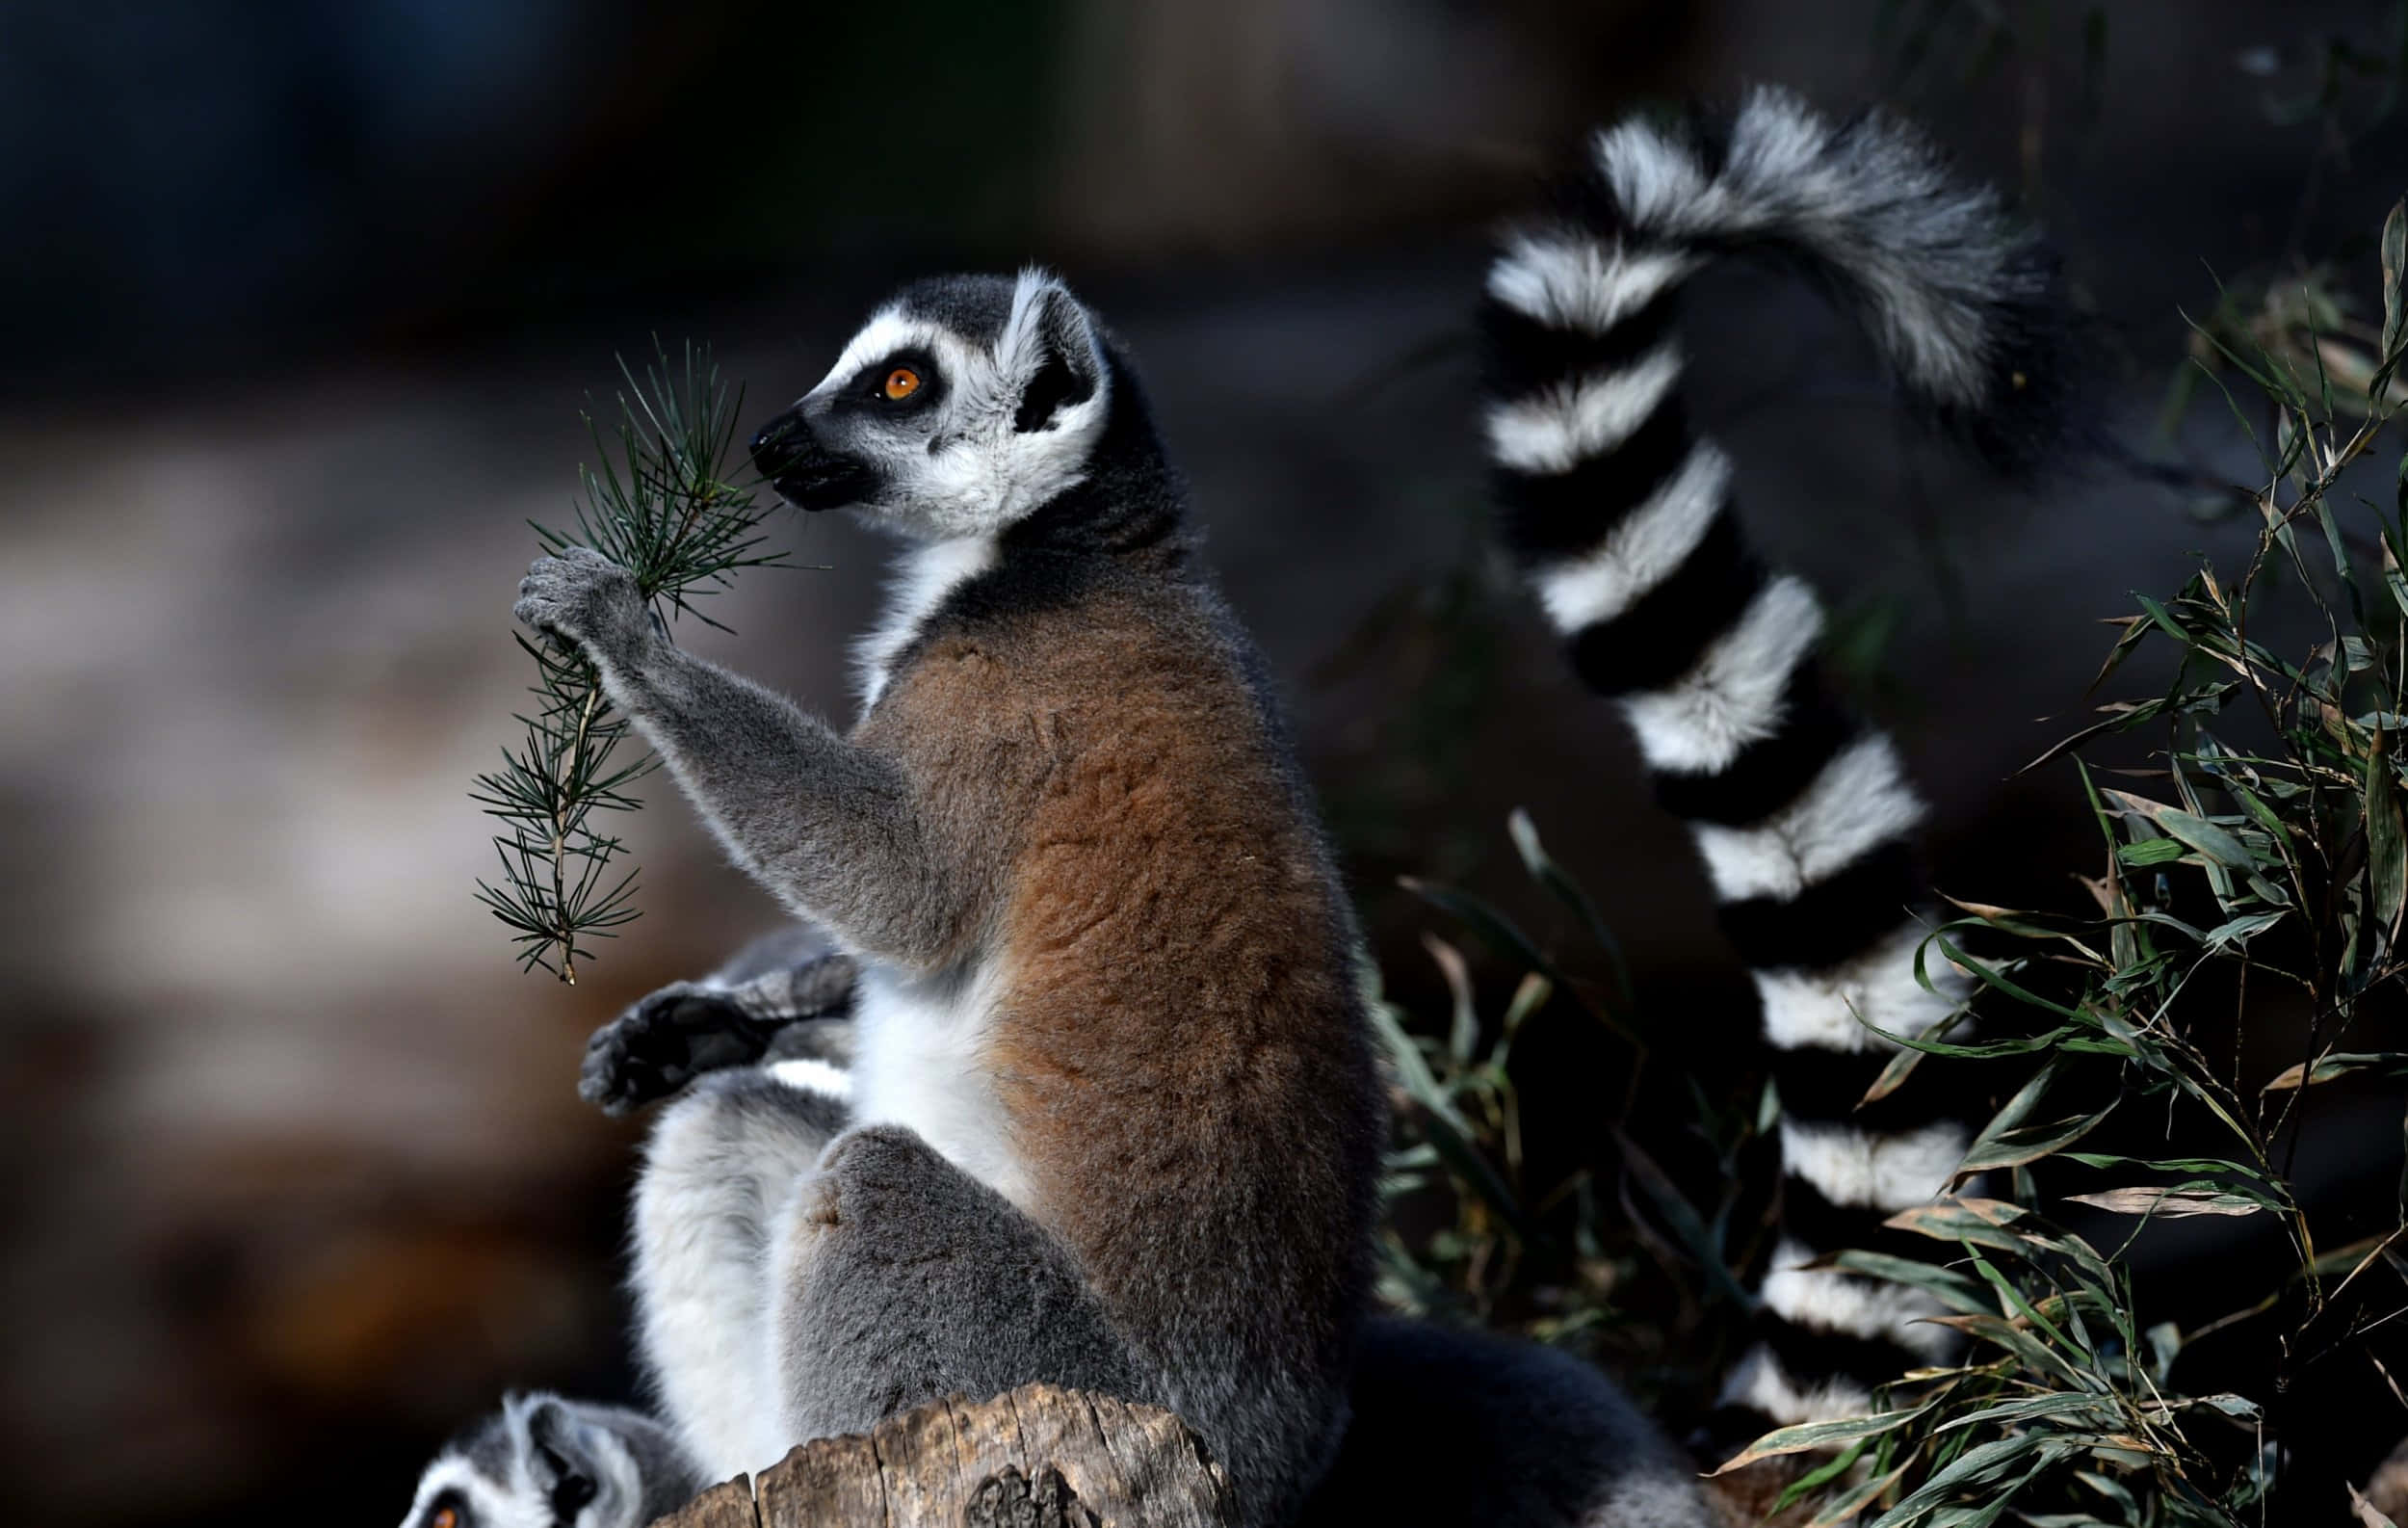 Stunning Portrait Of A Lemur In Its Natural Habitat